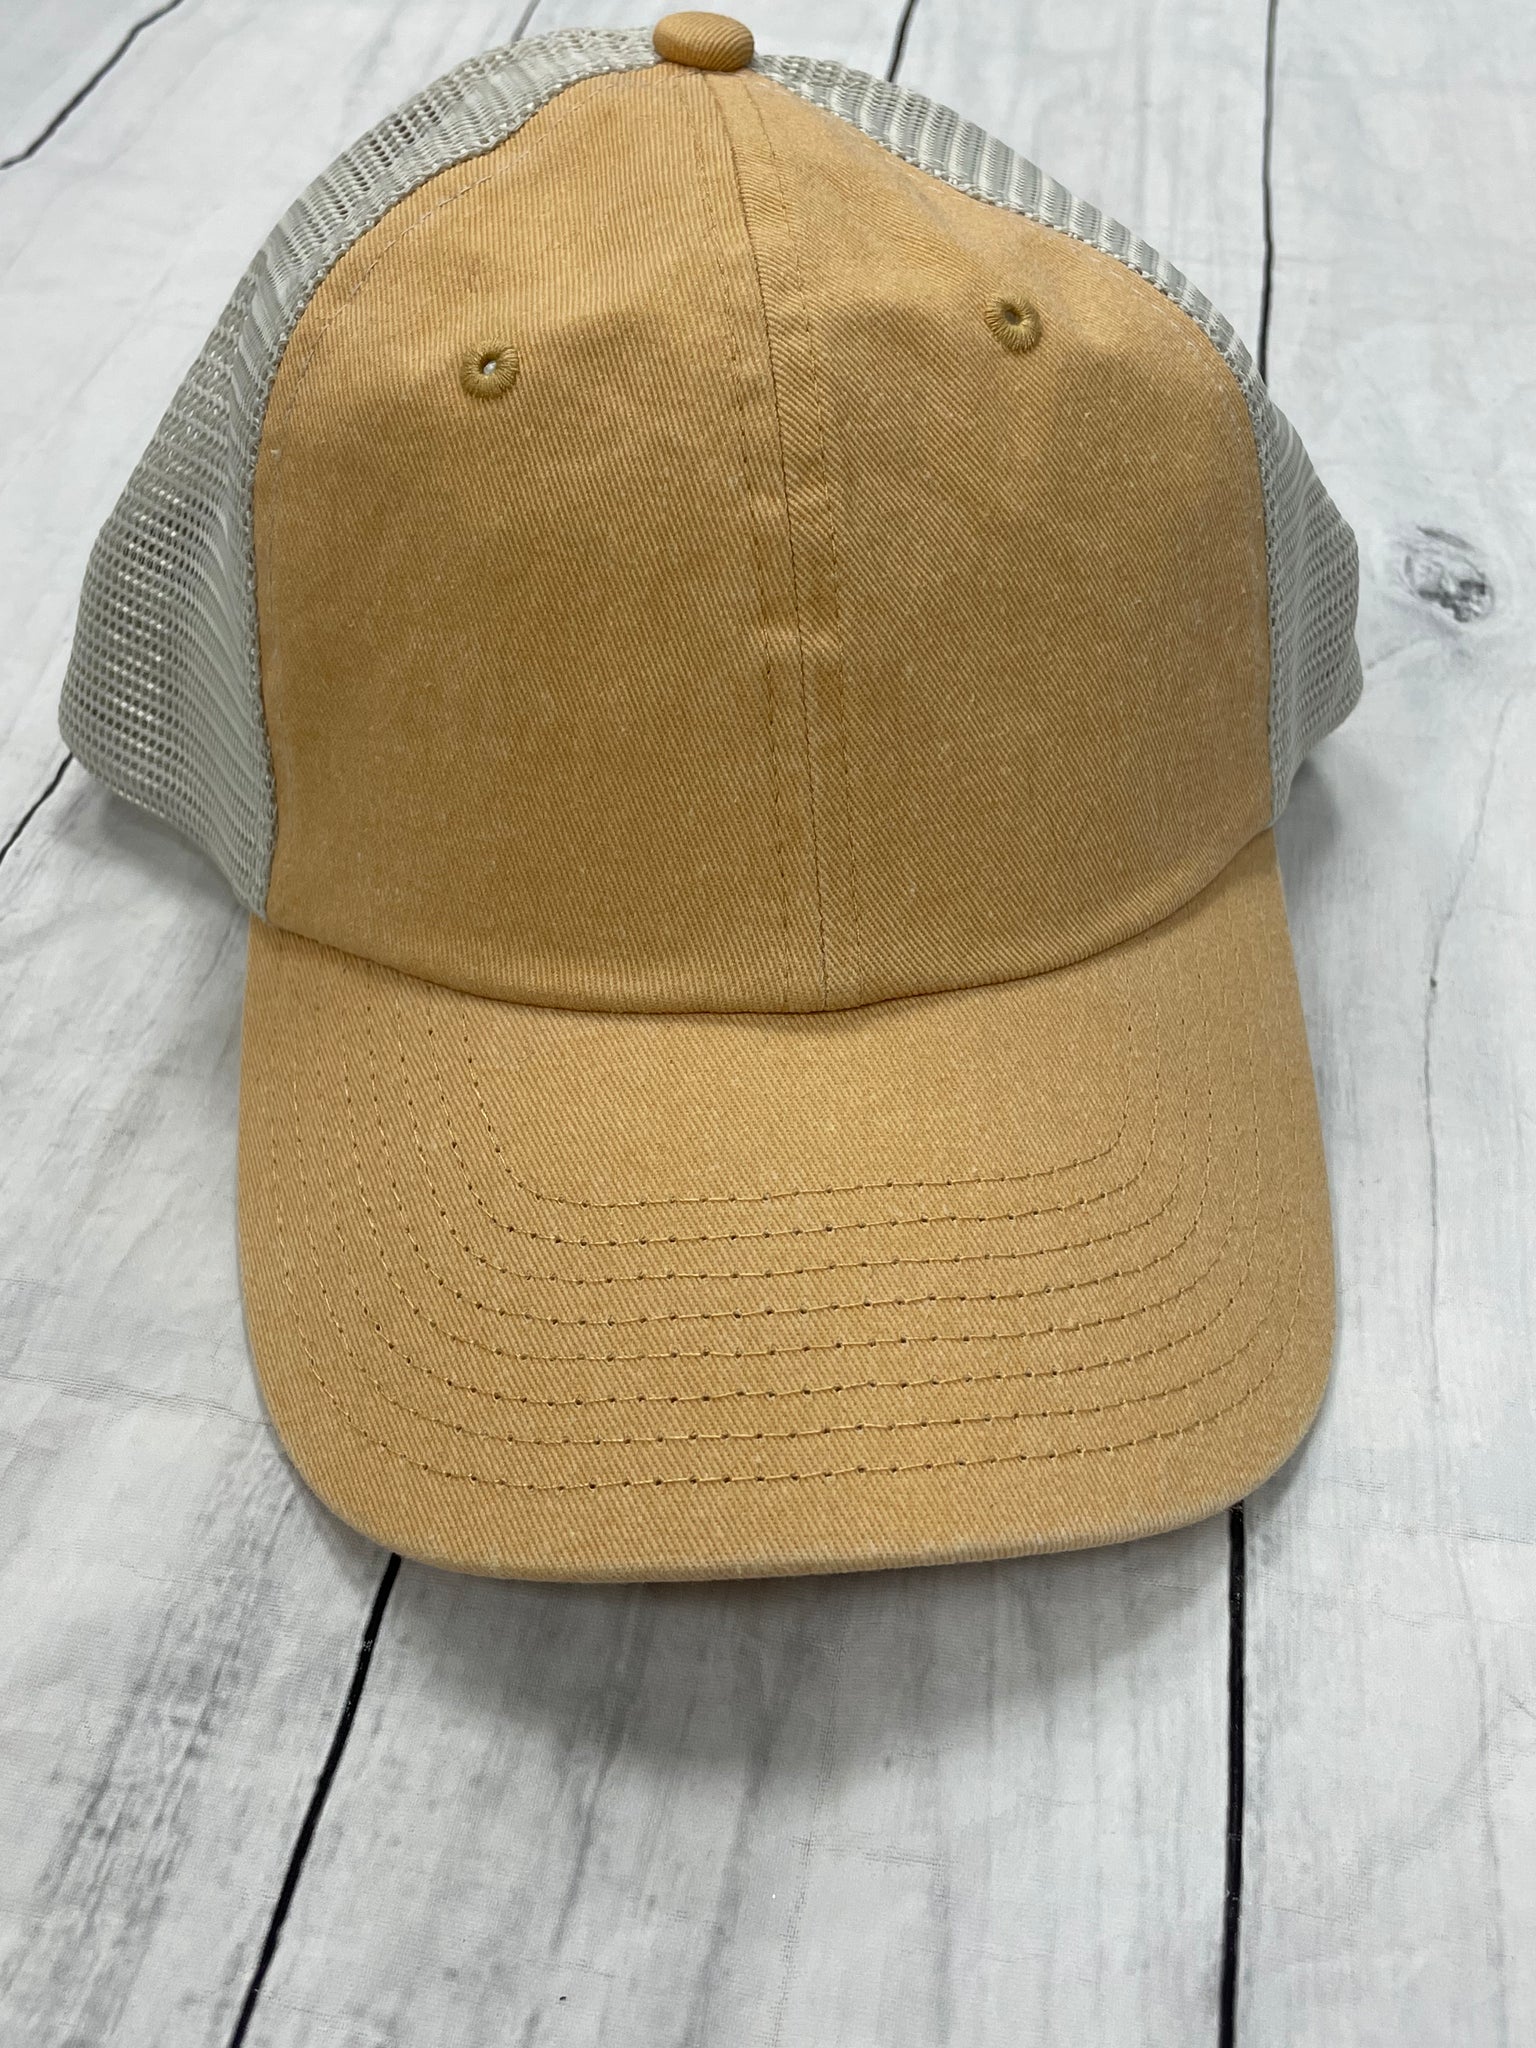 Trucker style Baseball Hat - Mustard